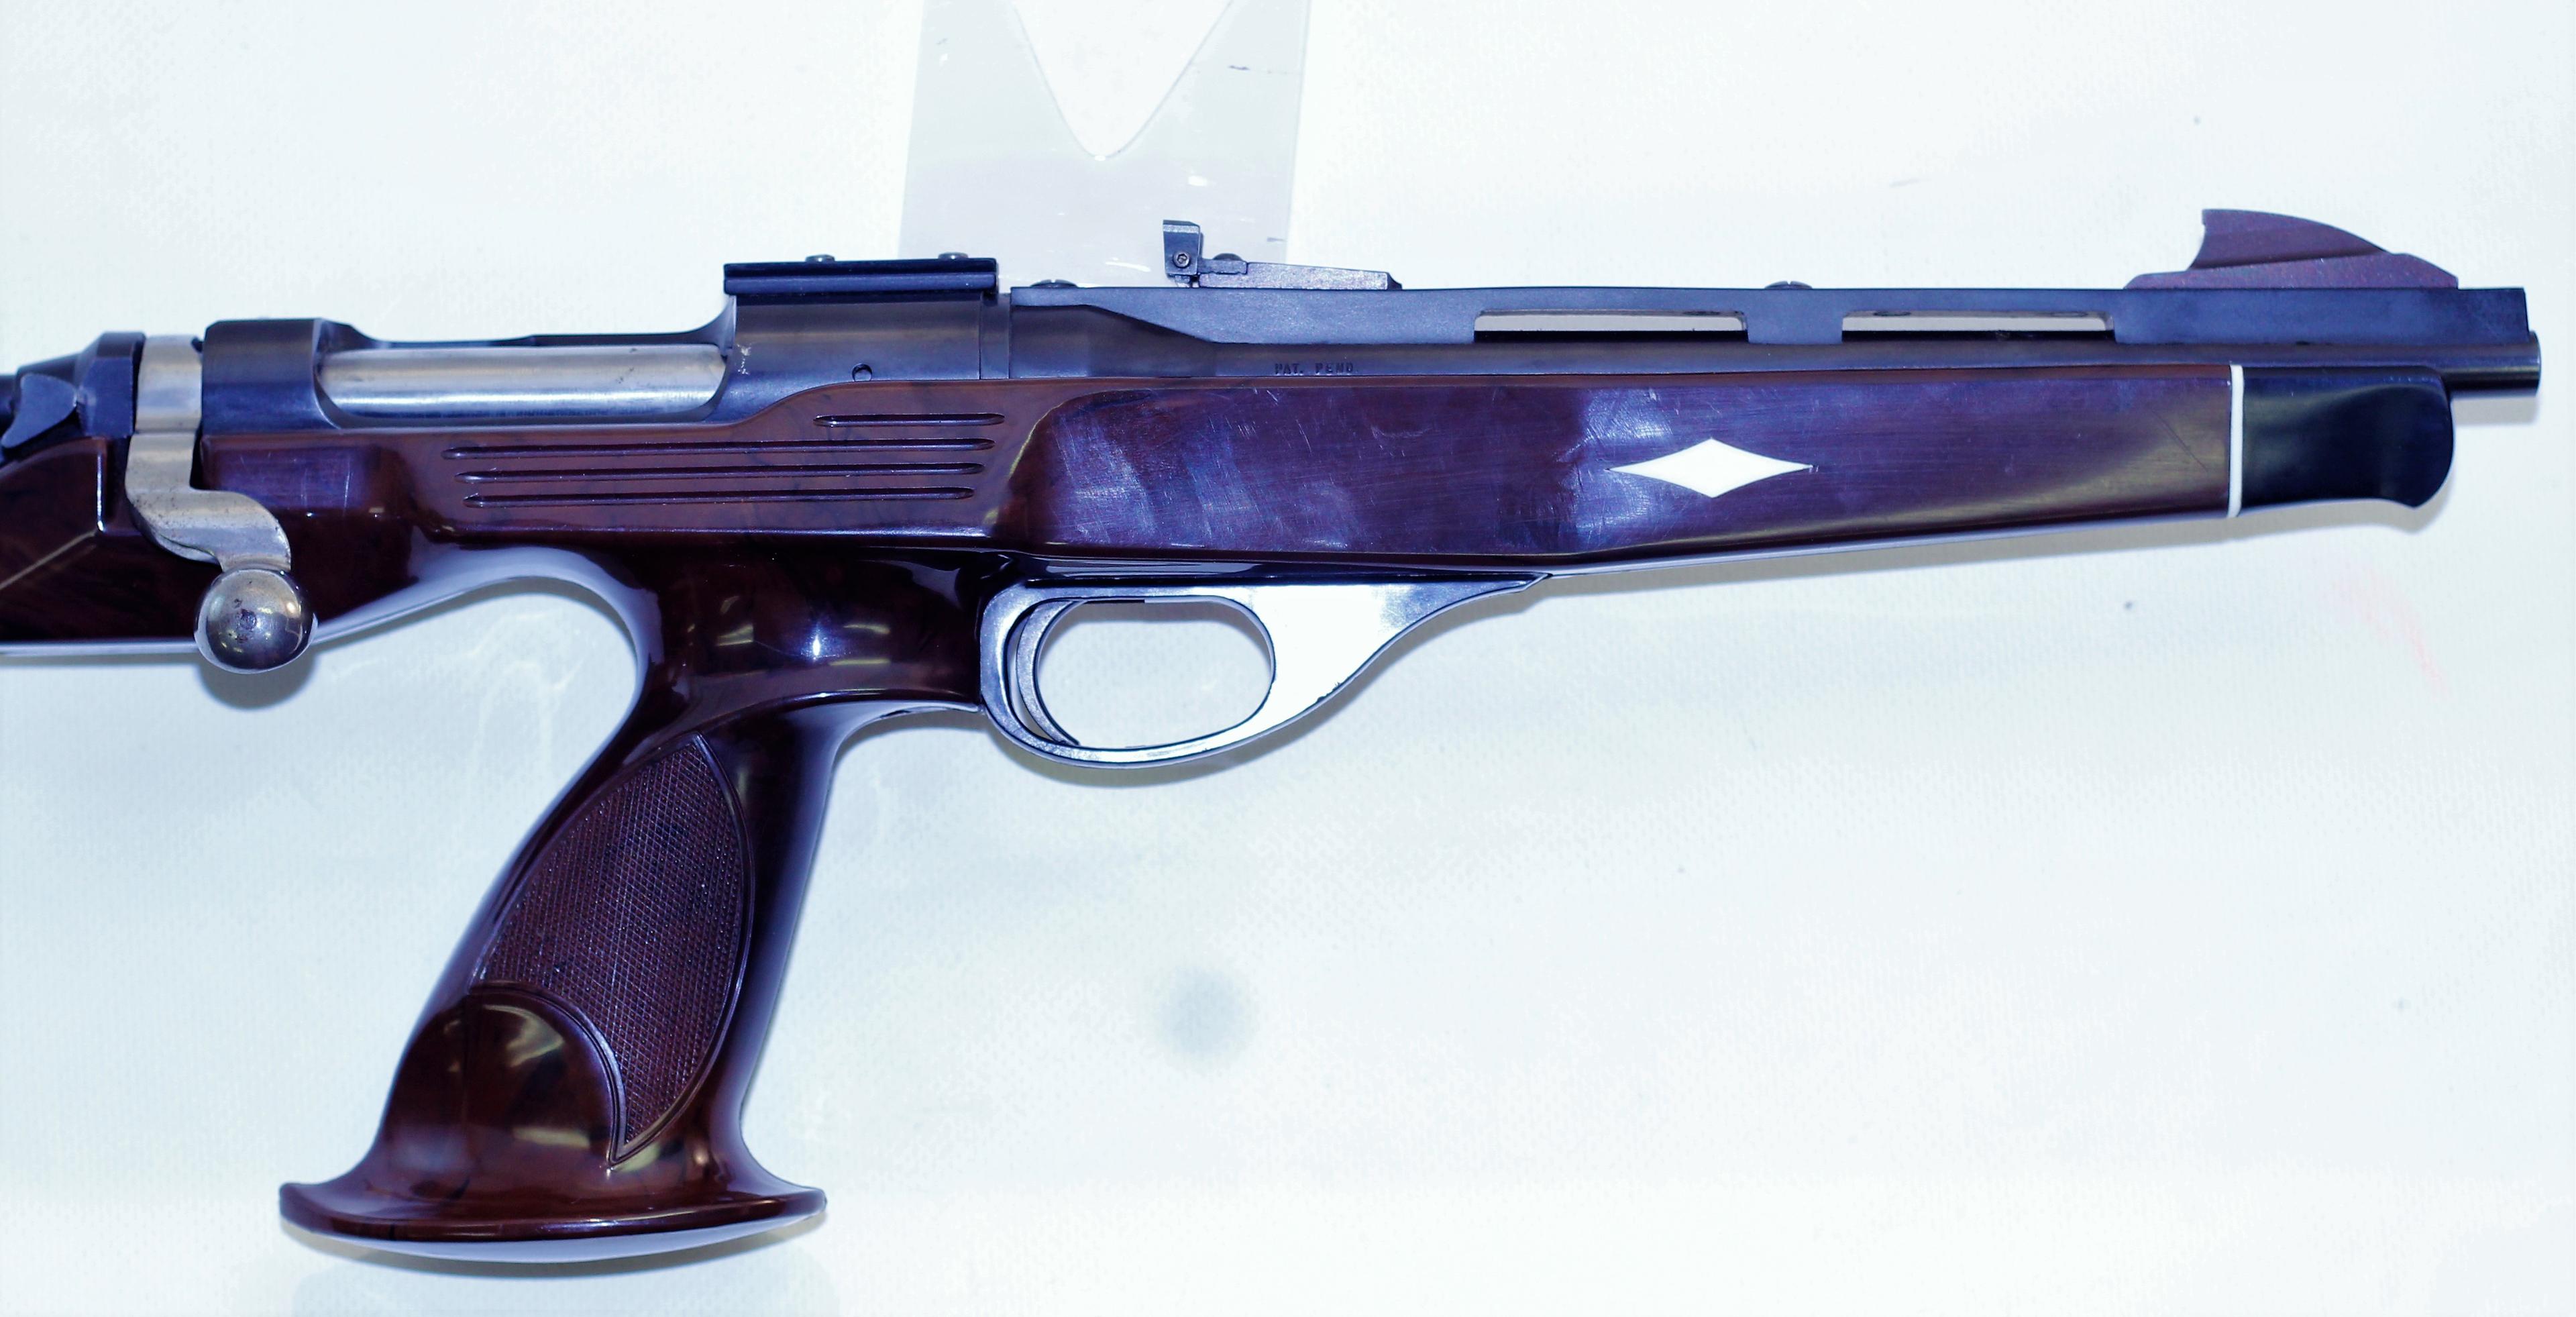 Remington XP-100 221 Rem Fireball cal b/a pistol